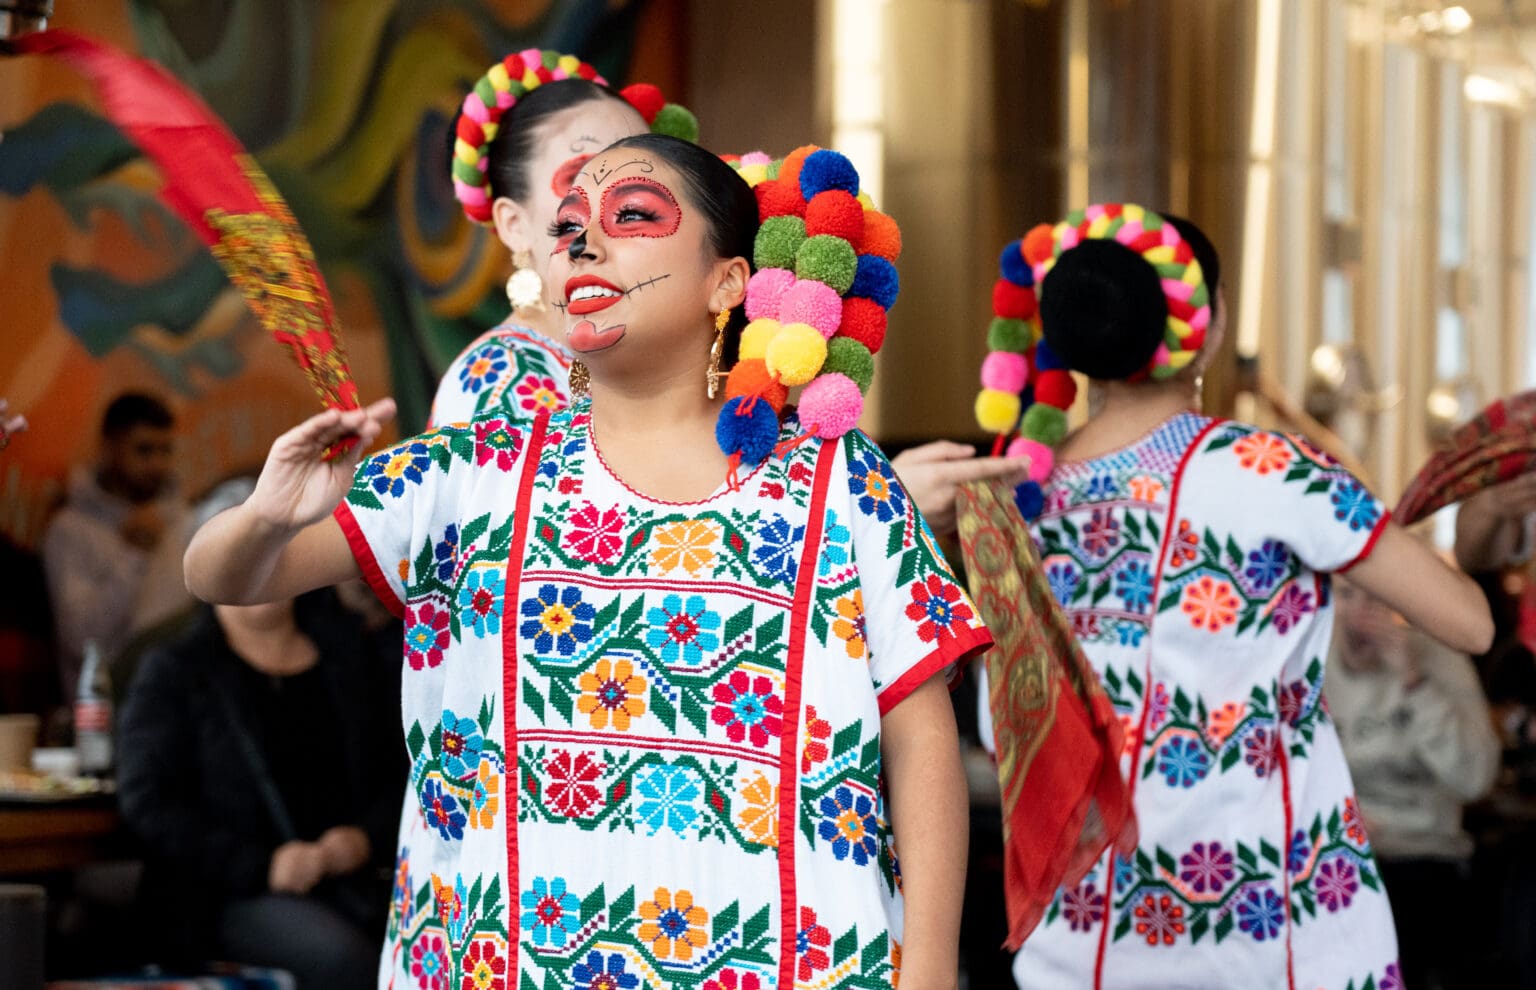 Dancer Arianna Gonzalez performs alongside other dancers dressed in colorful Día de los Muertos themed attire.